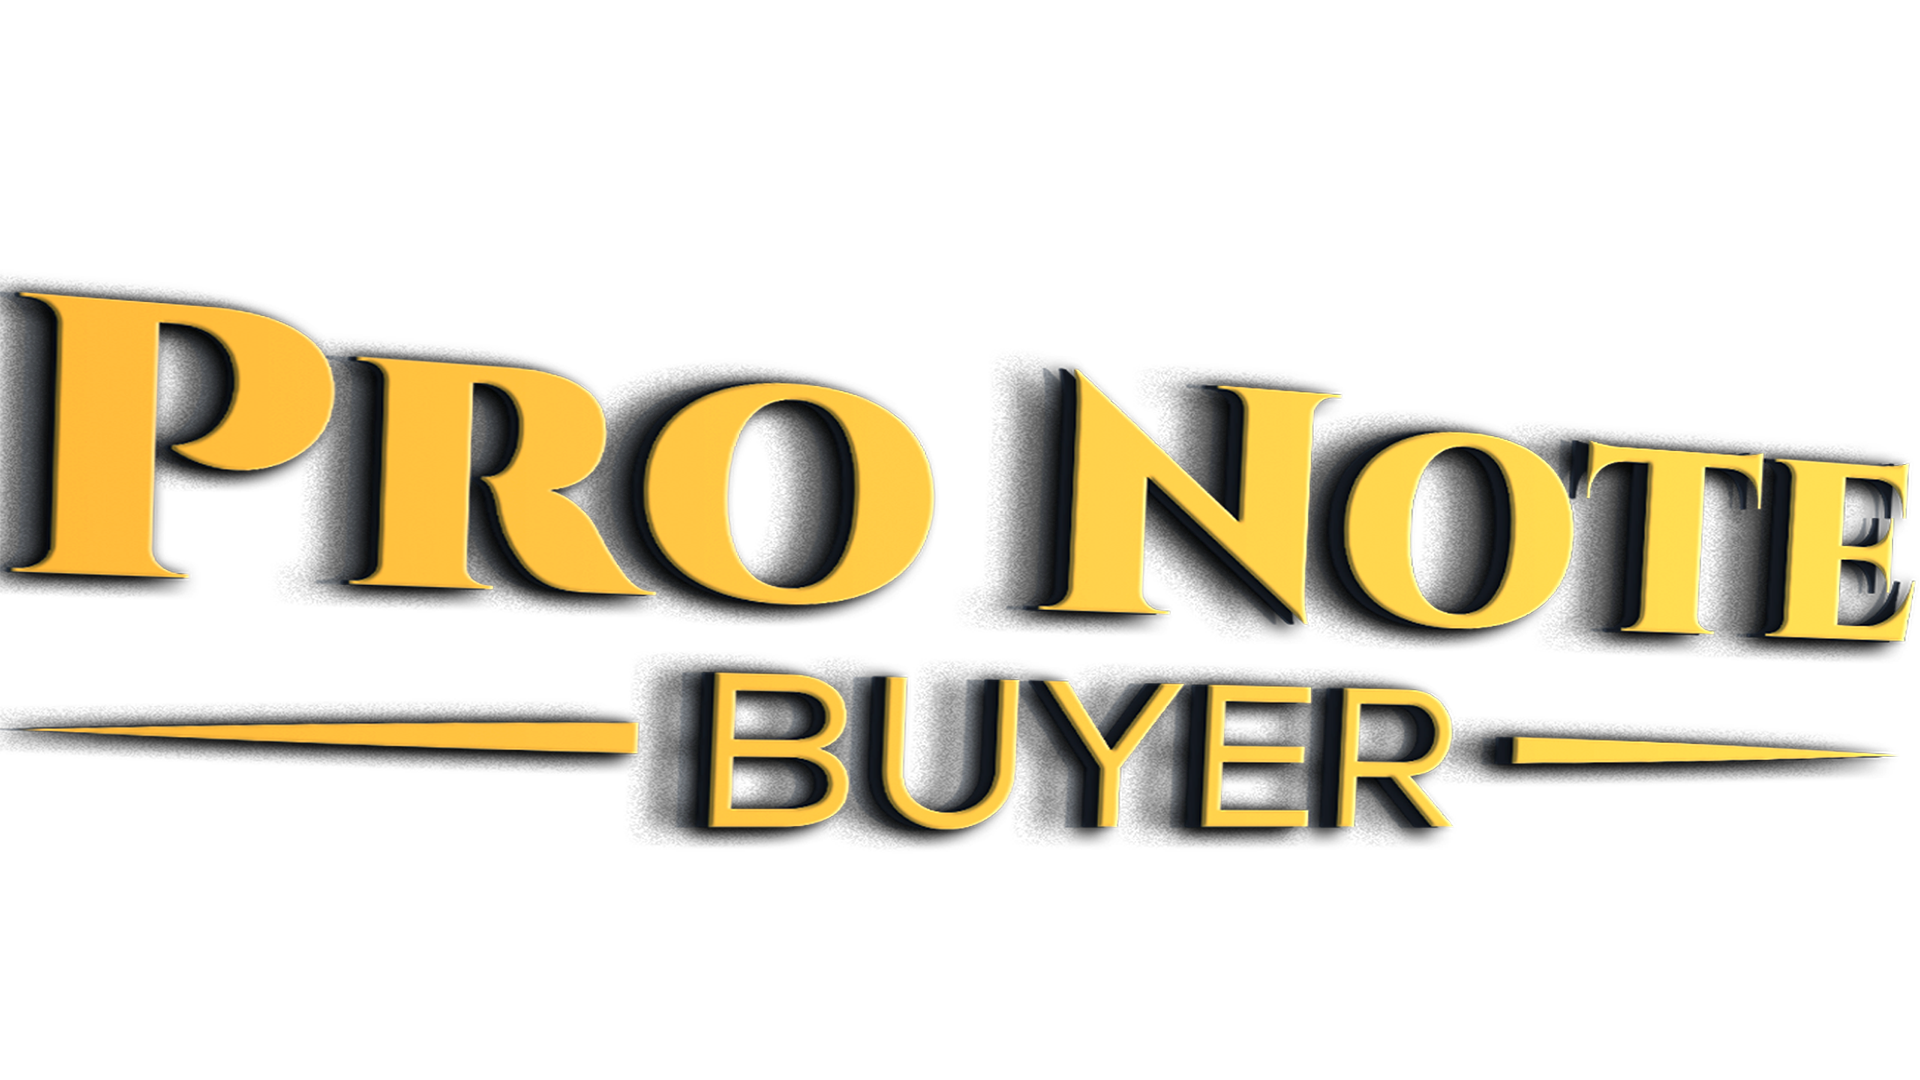 Pro Note Buyer logo